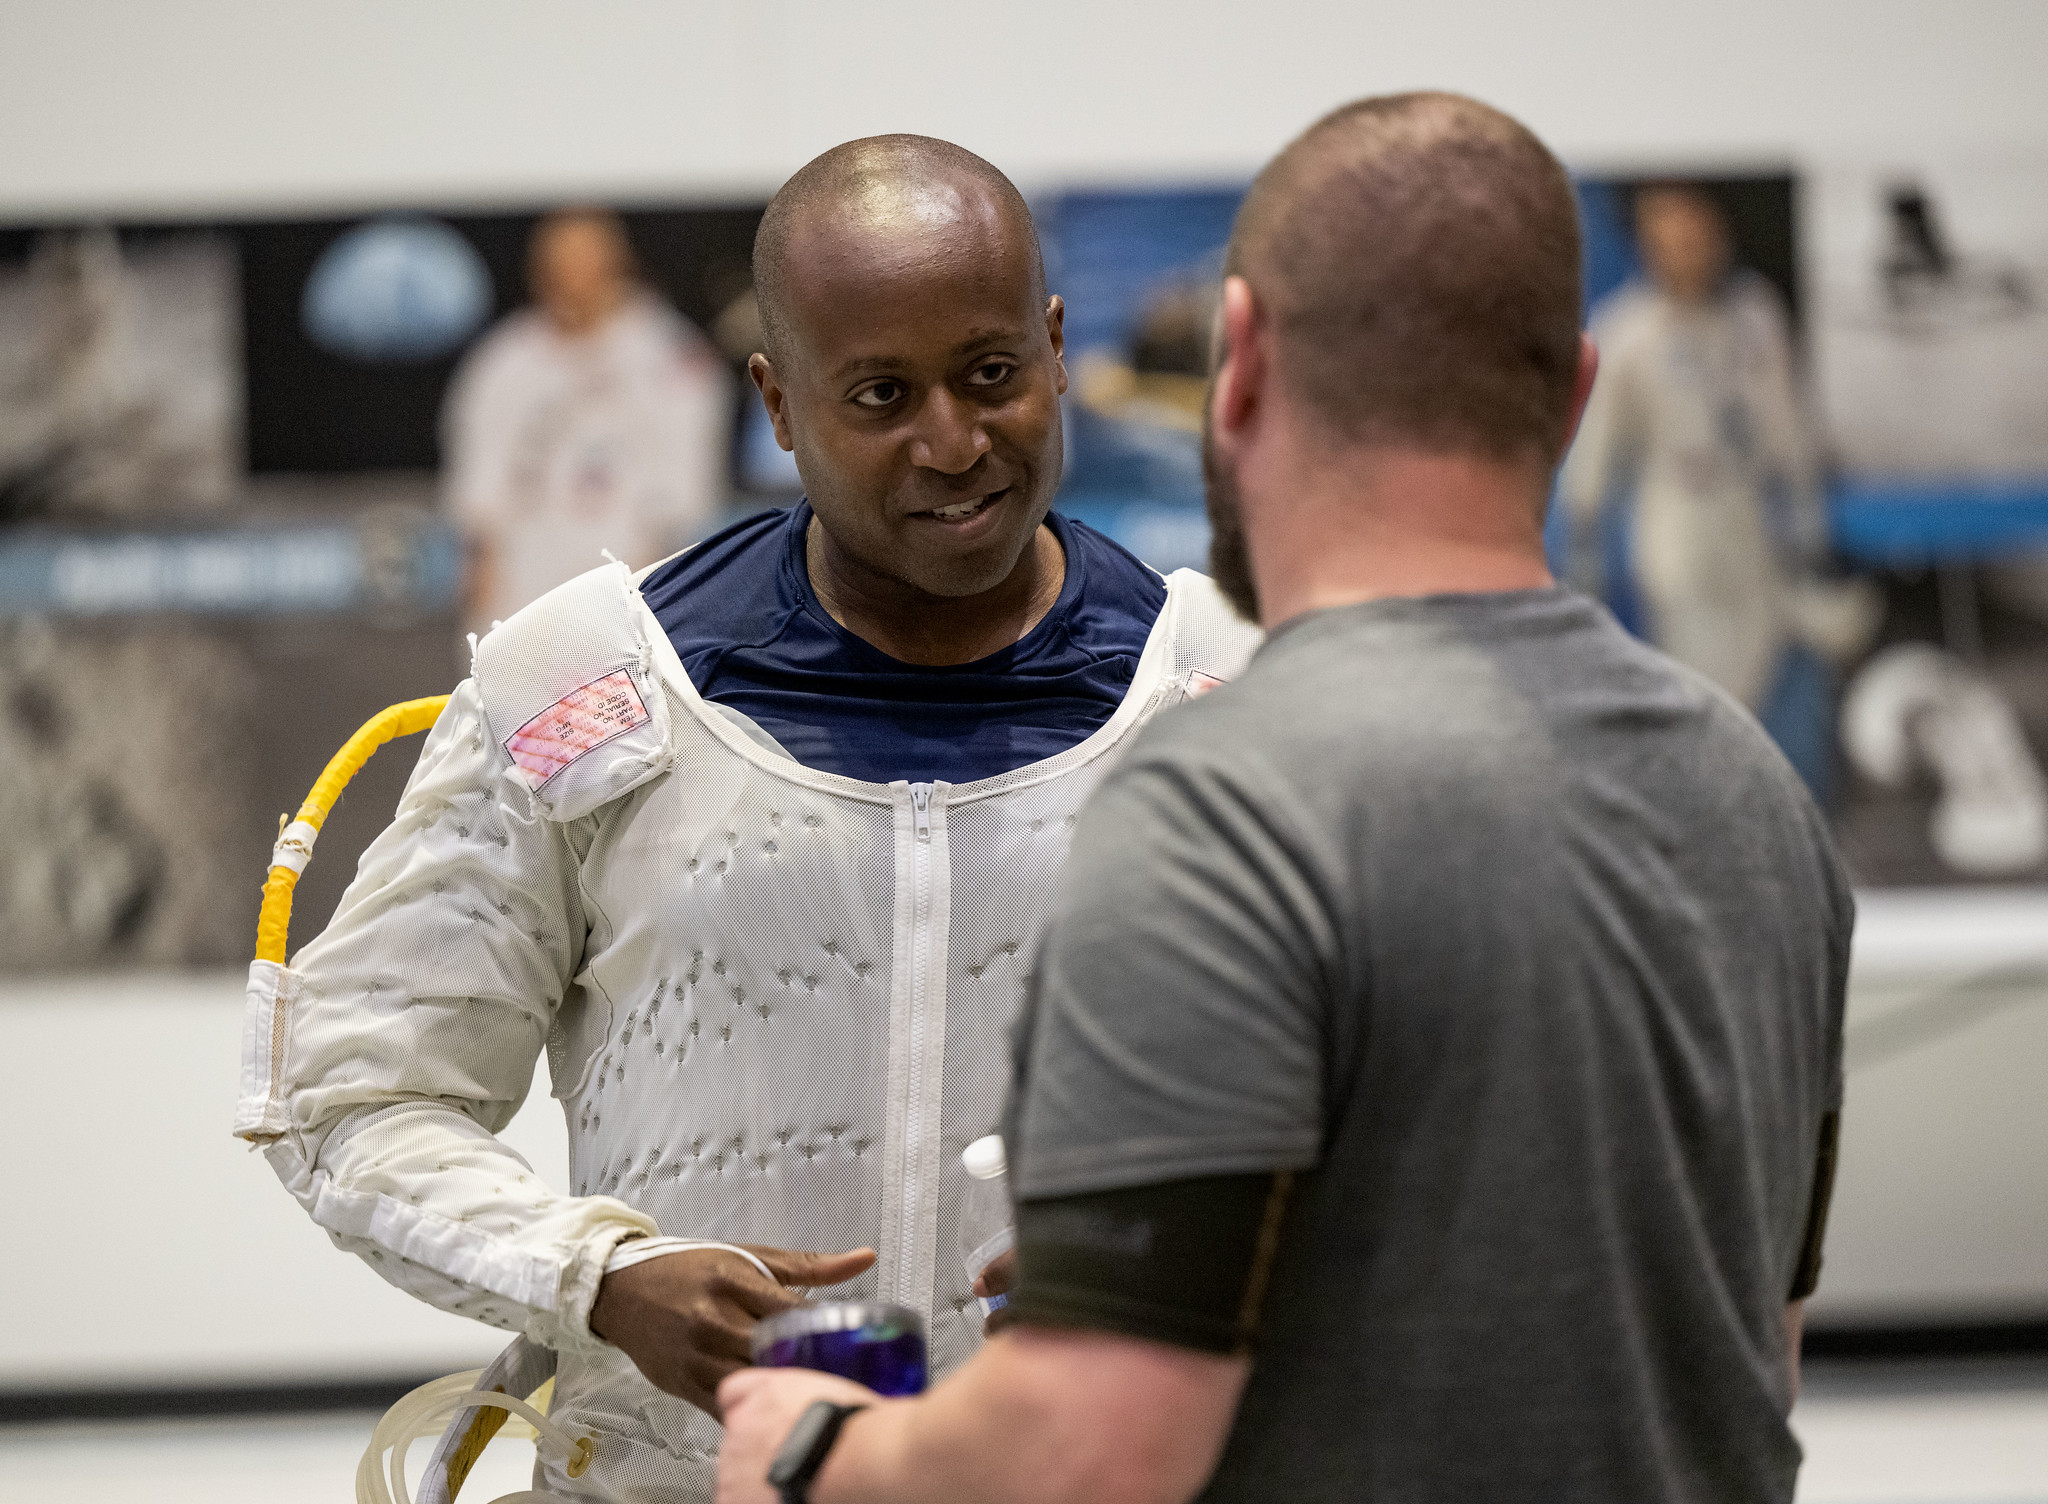 2021 NASA astronaut candidate Andre Douglas prepares for underwater spacewalk training at NASA Johnson Space Center’s Neutral Buoyancy Laboratory